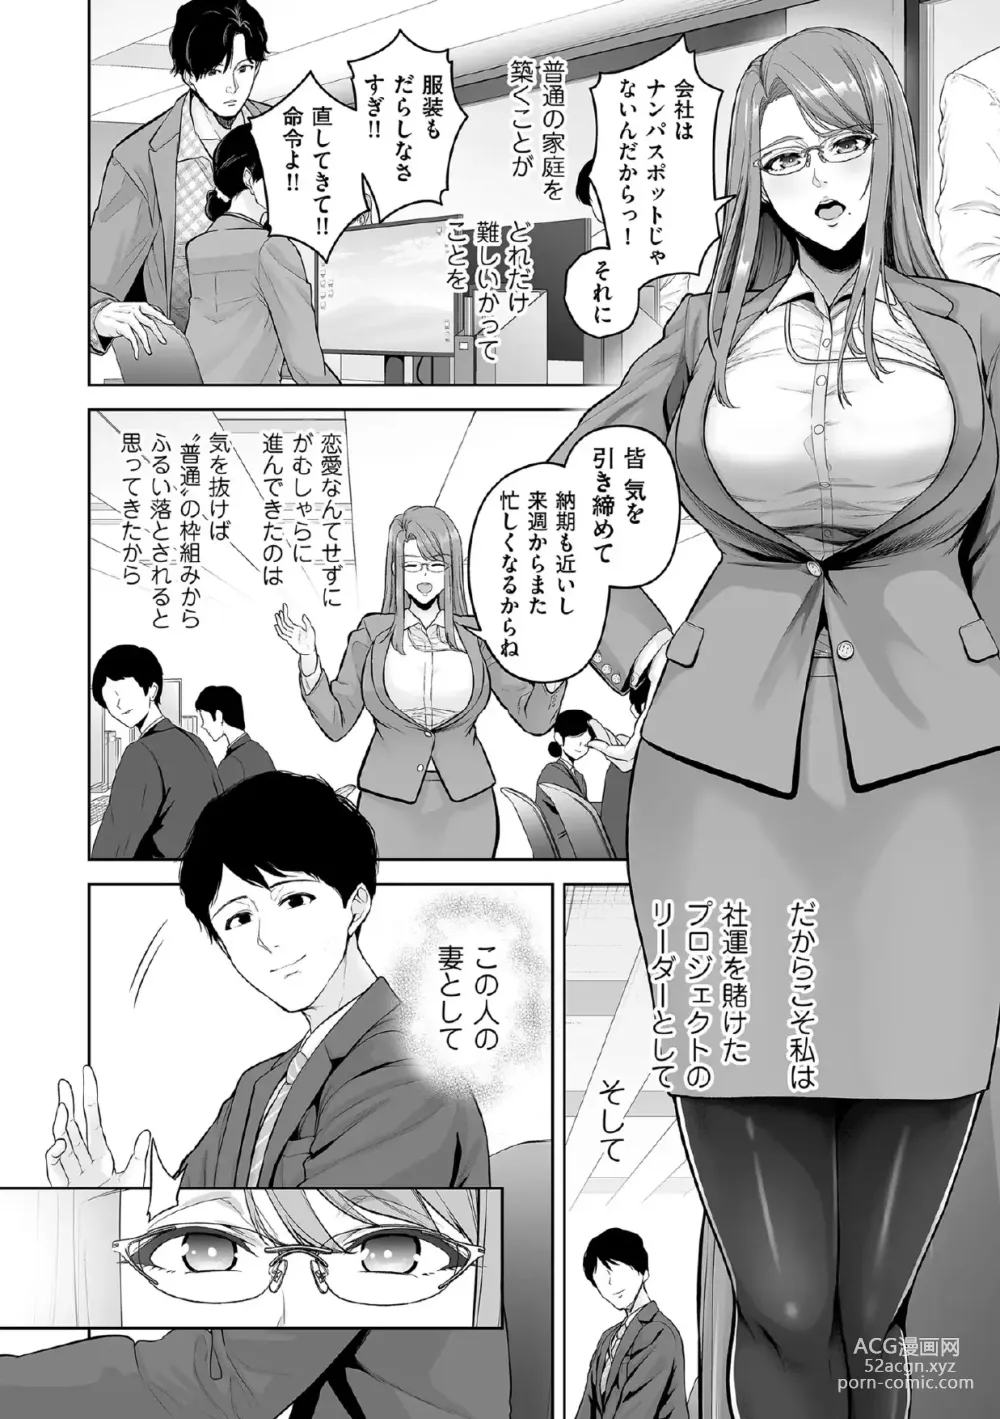 Page 2 of manga 本性 chapter 01-03